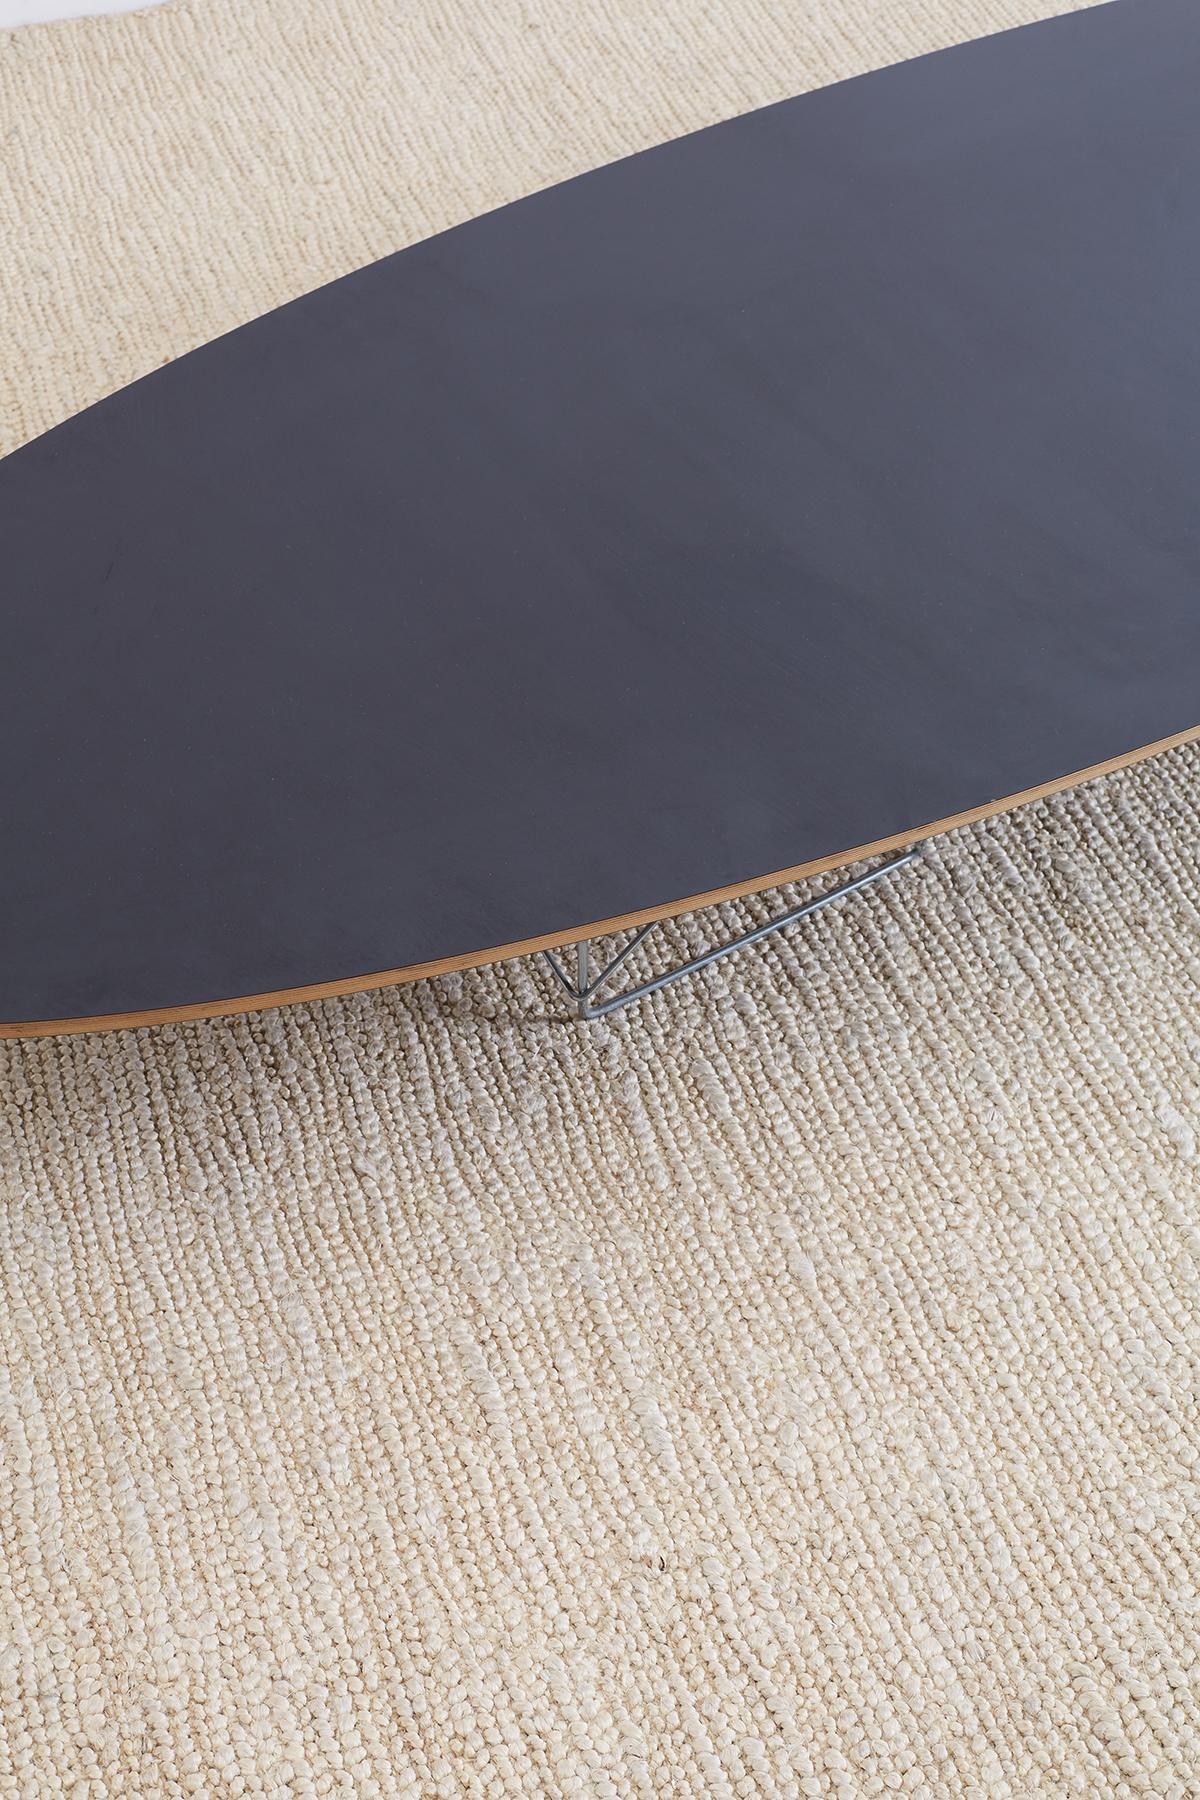 Eames for Herman Miller Black Elliptical Surfboard Table 1